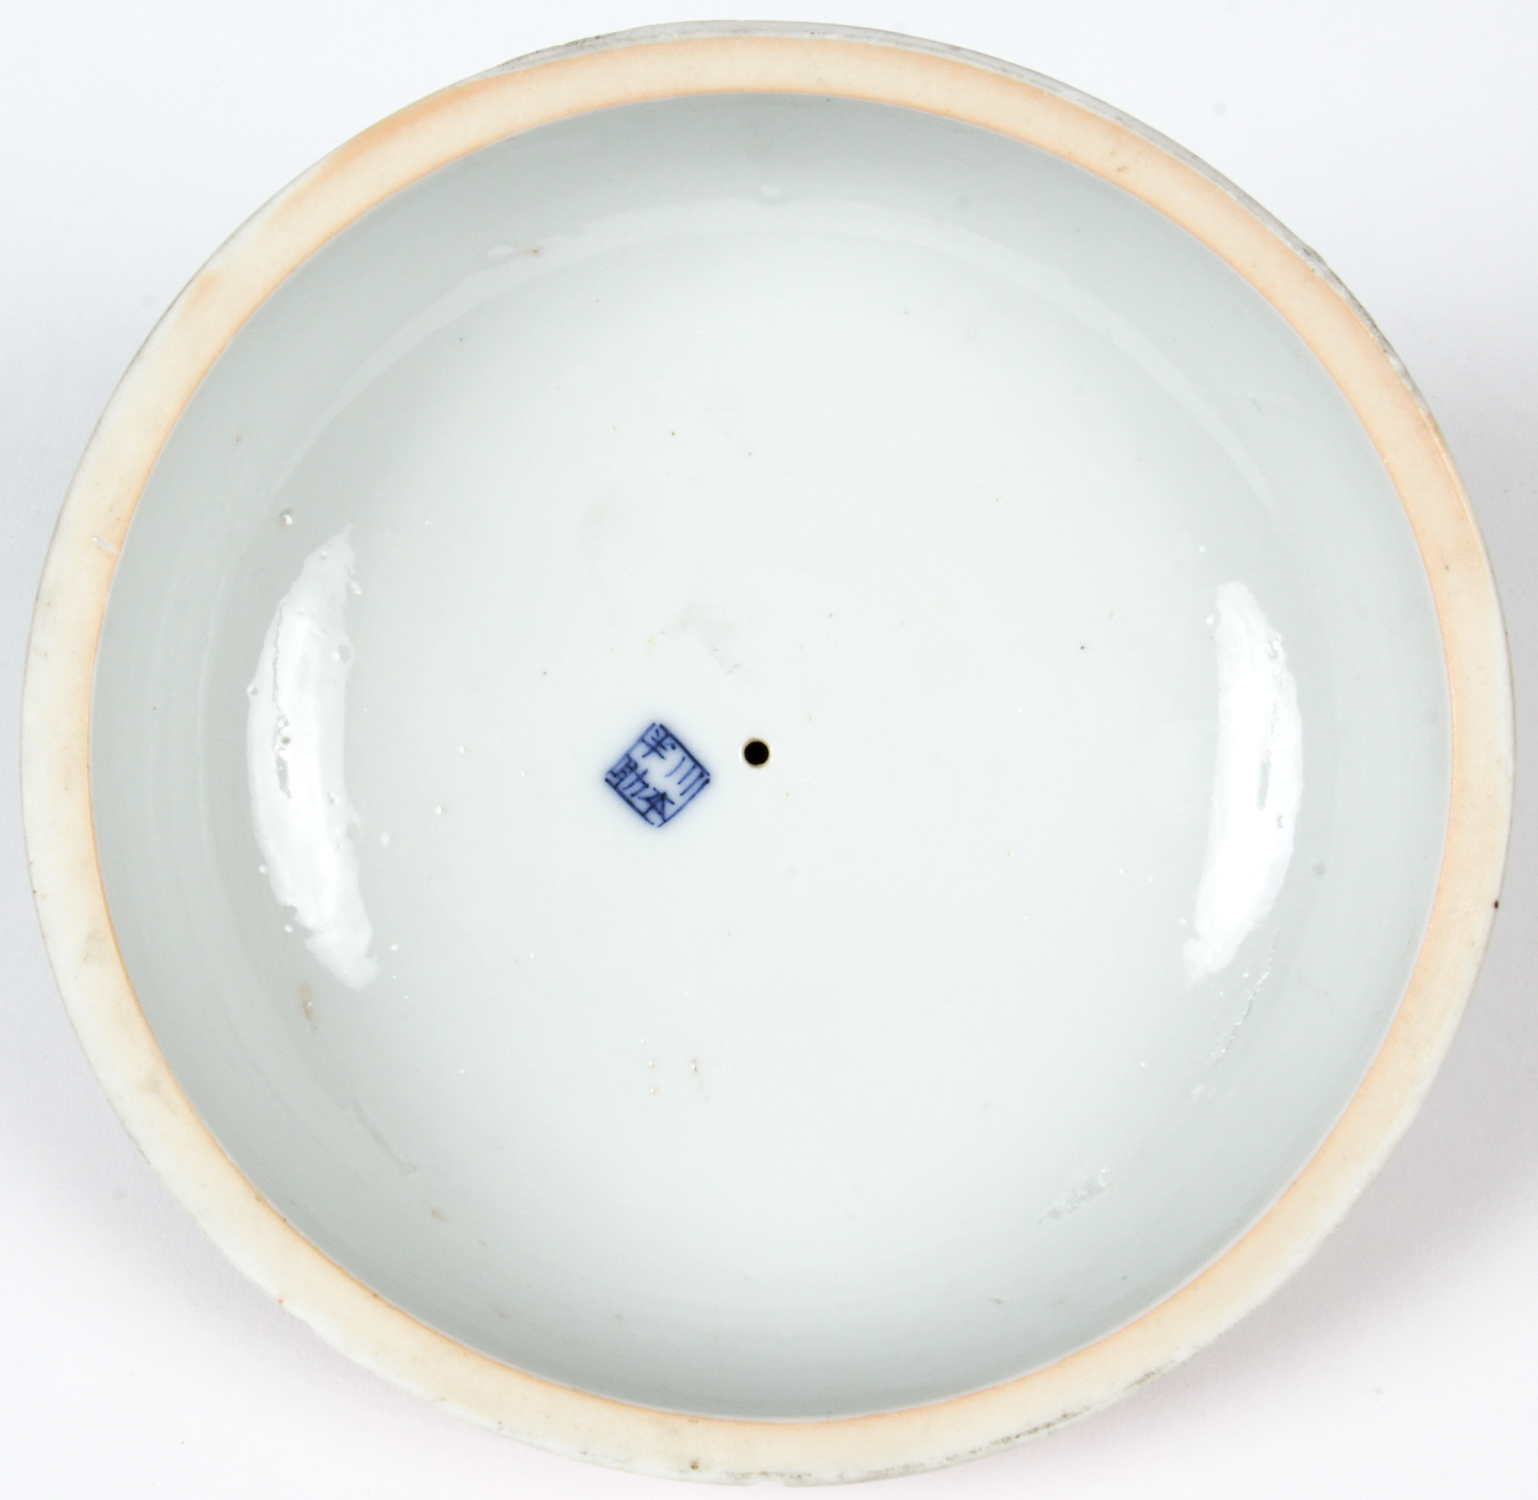 2 Antique Japanese Satsuma and Seto Items: A fine 19th century satsuma earthenware plate depicting - Image 6 of 6